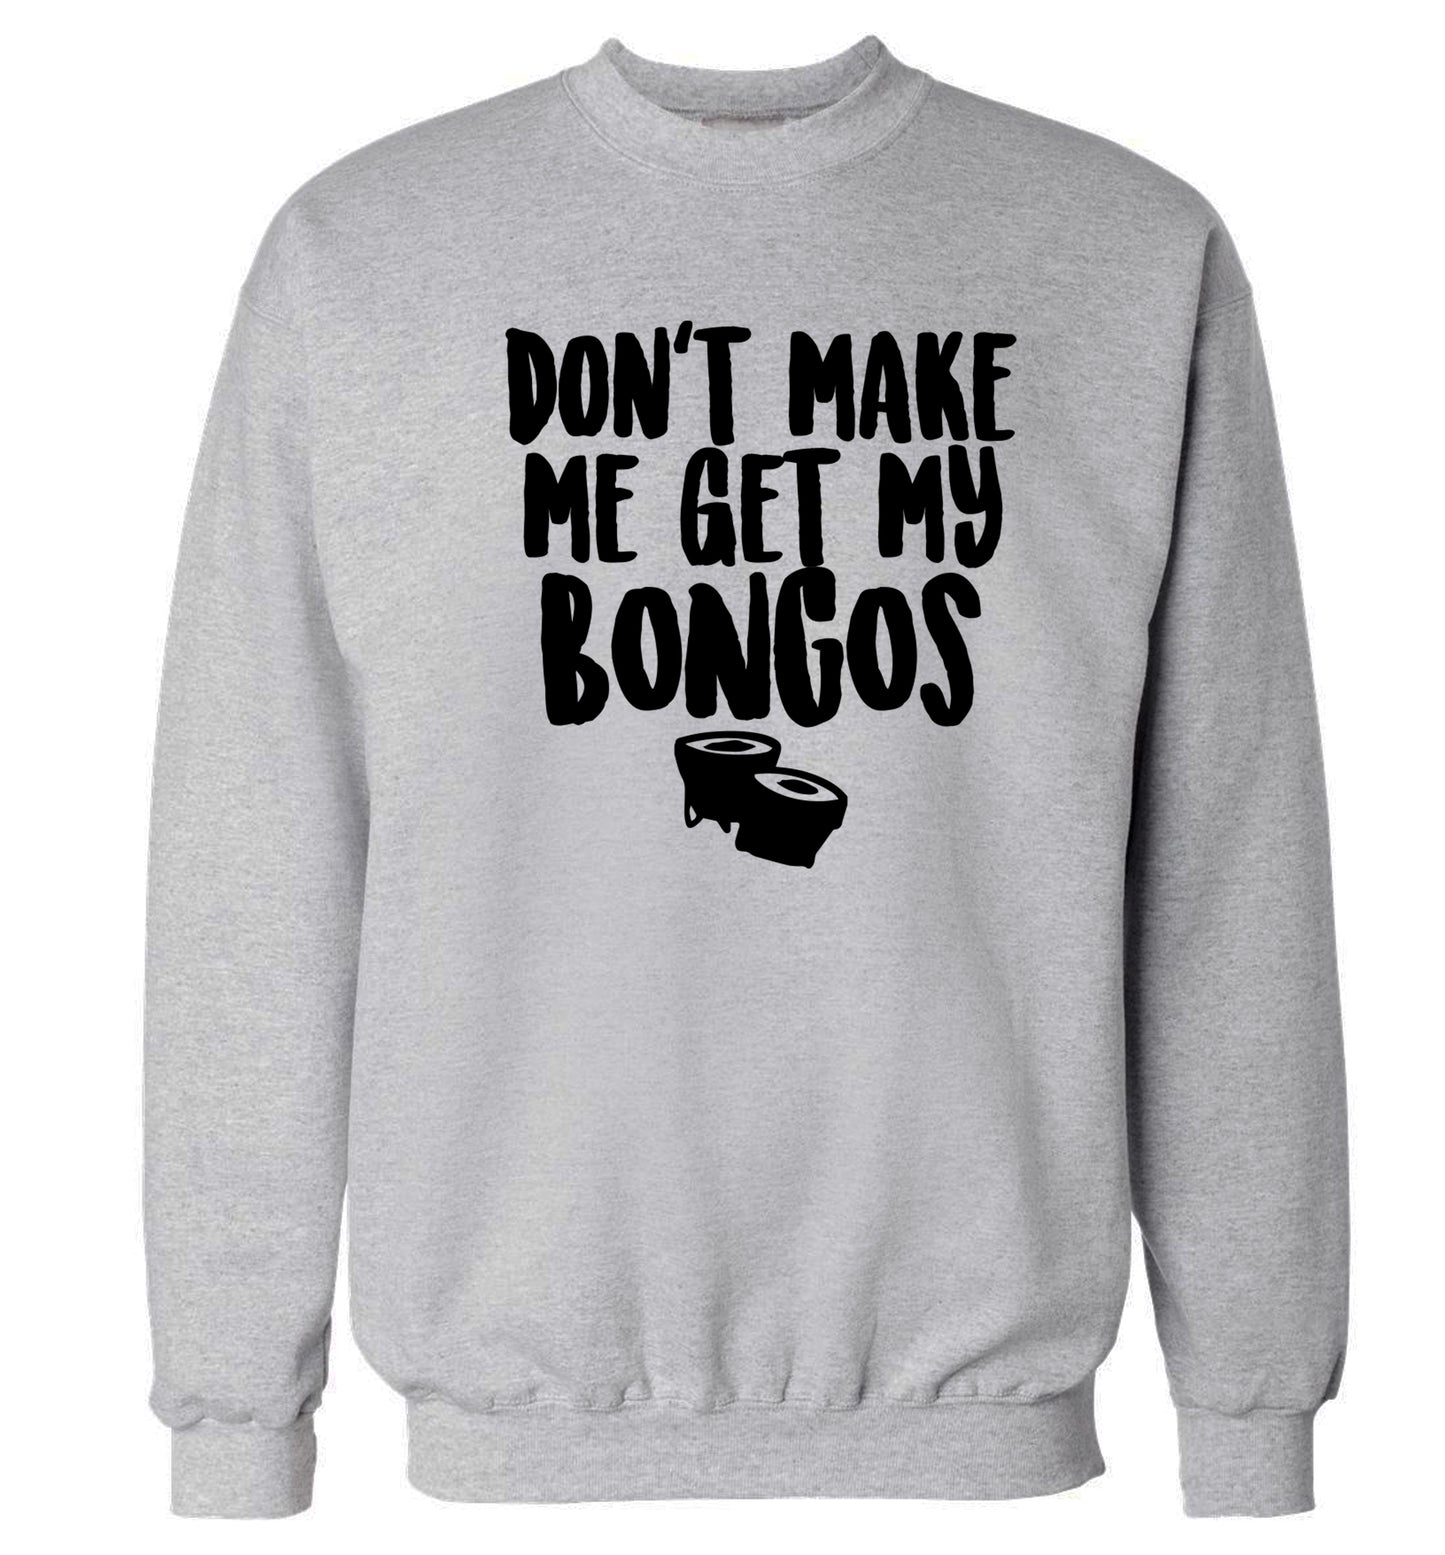 Don't make me get my bongos Adult's unisex grey Sweater 2XL